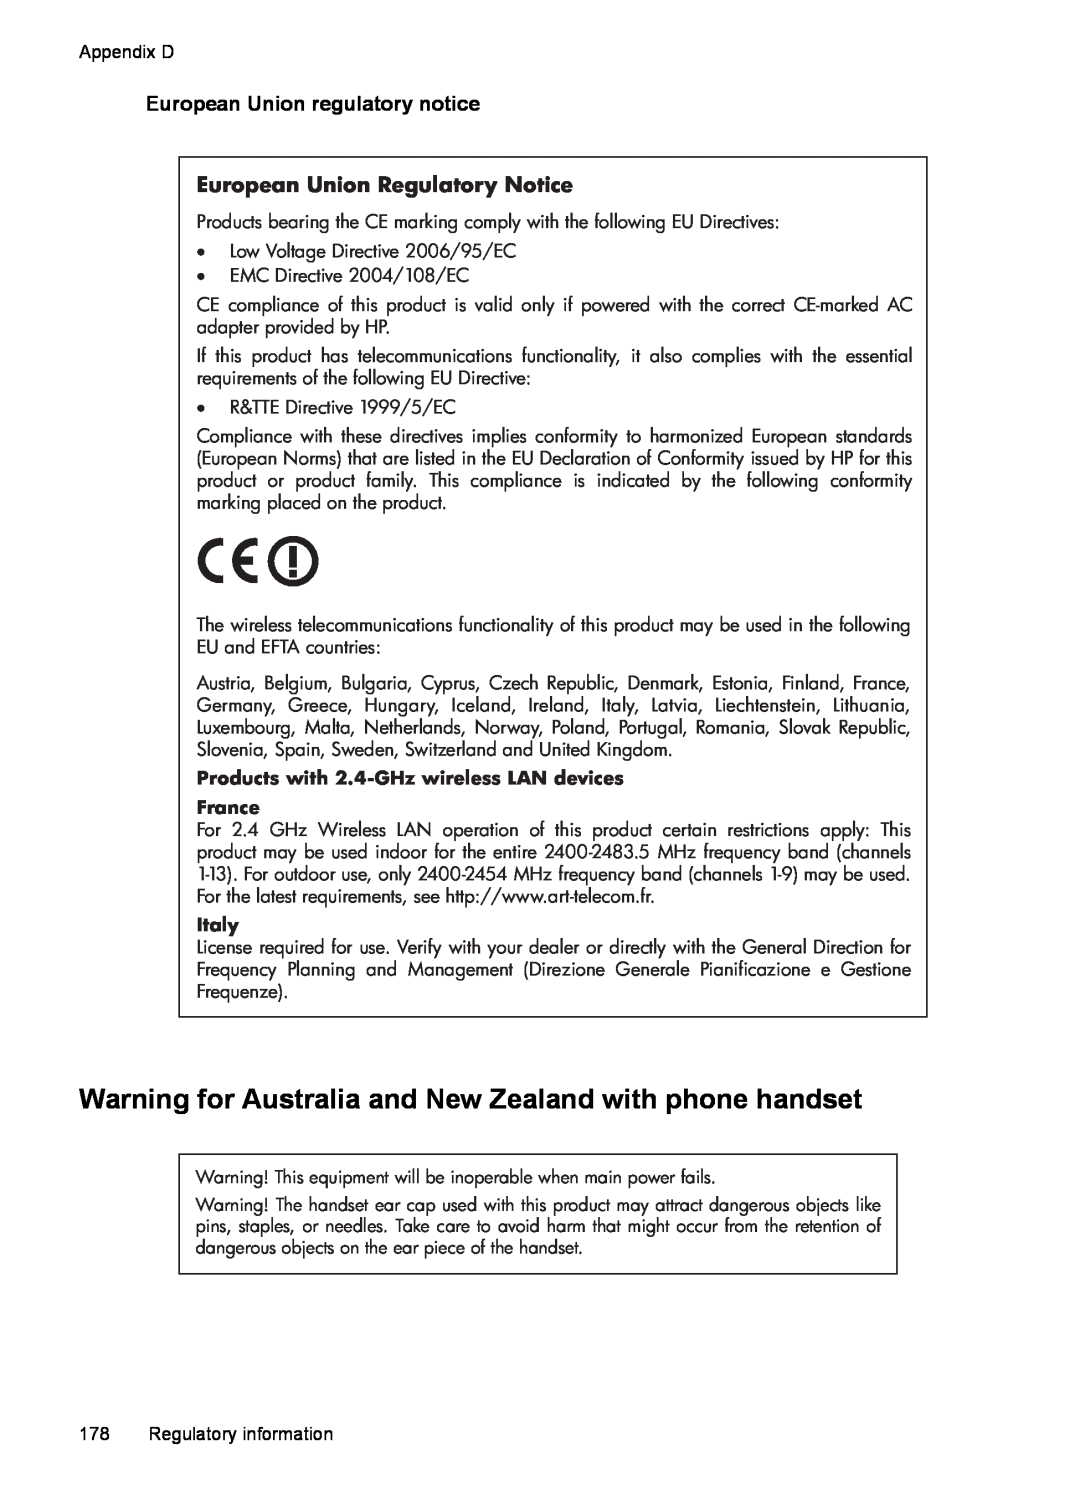 HP J4580, J4680, J4660 Warning for Australia and New Zealand with phone handset, European Union regulatory notice, Italy 